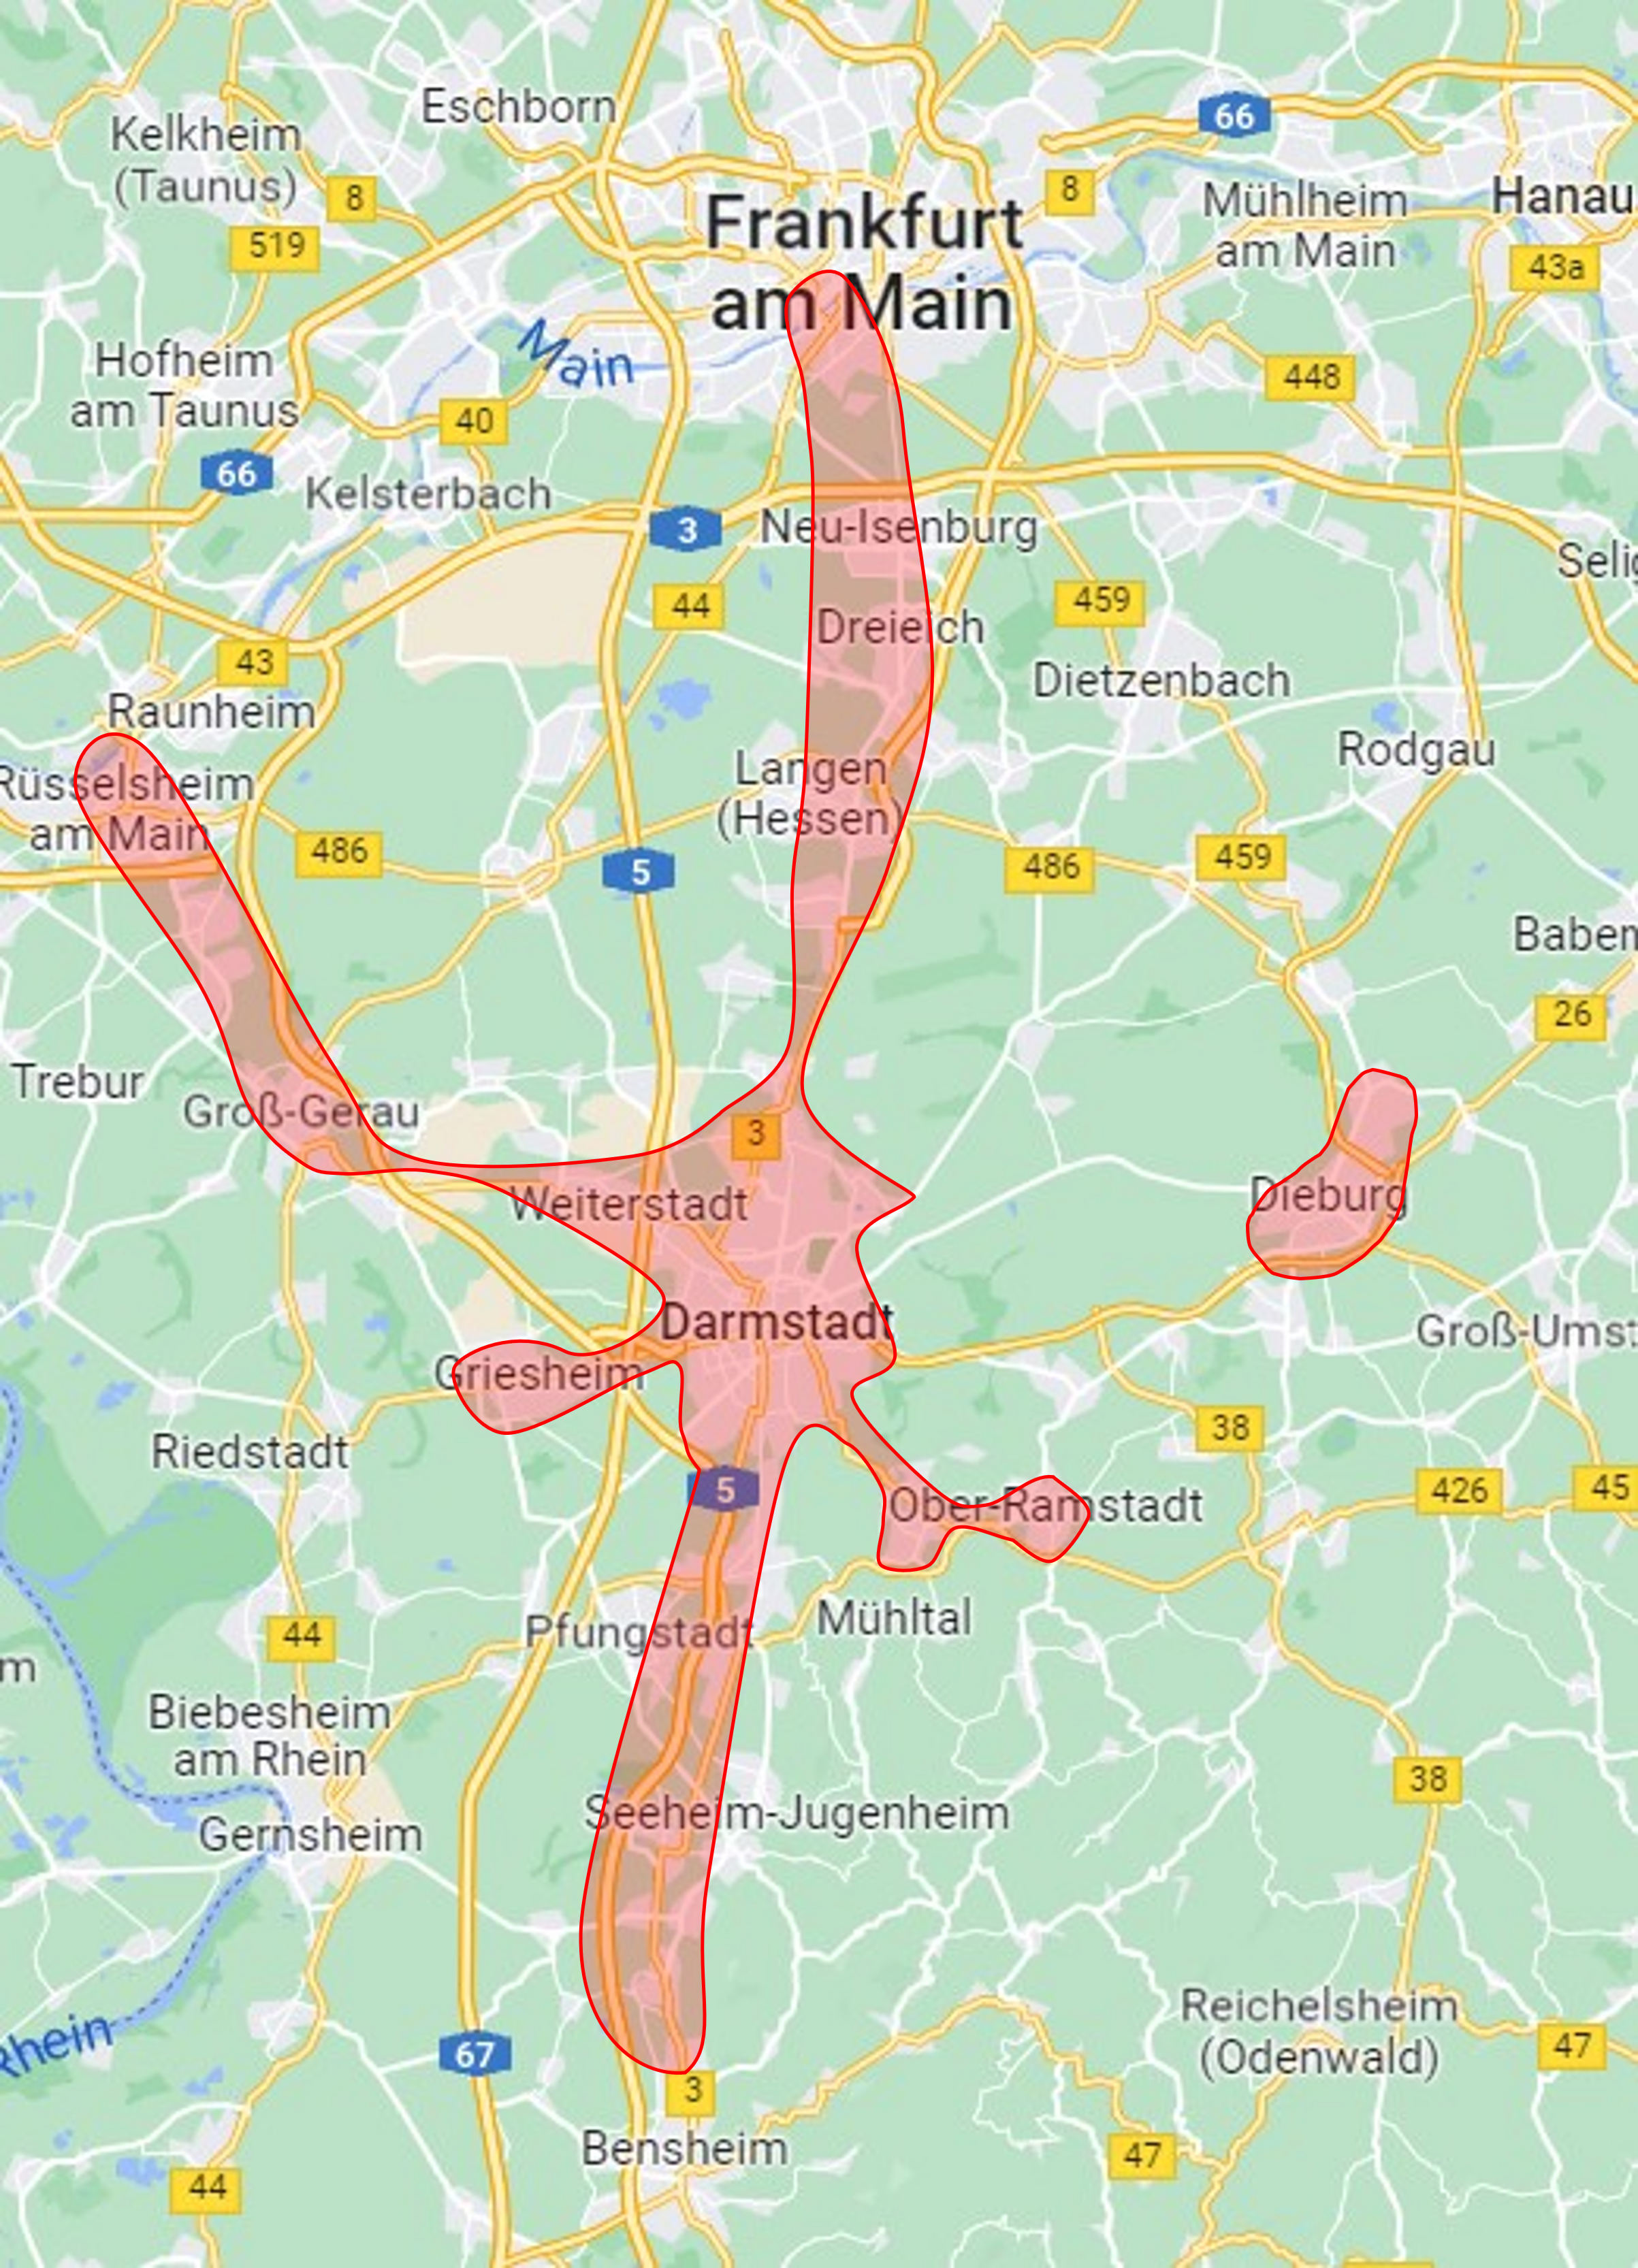 Neighborhoods within public transport reach to Darmstadt